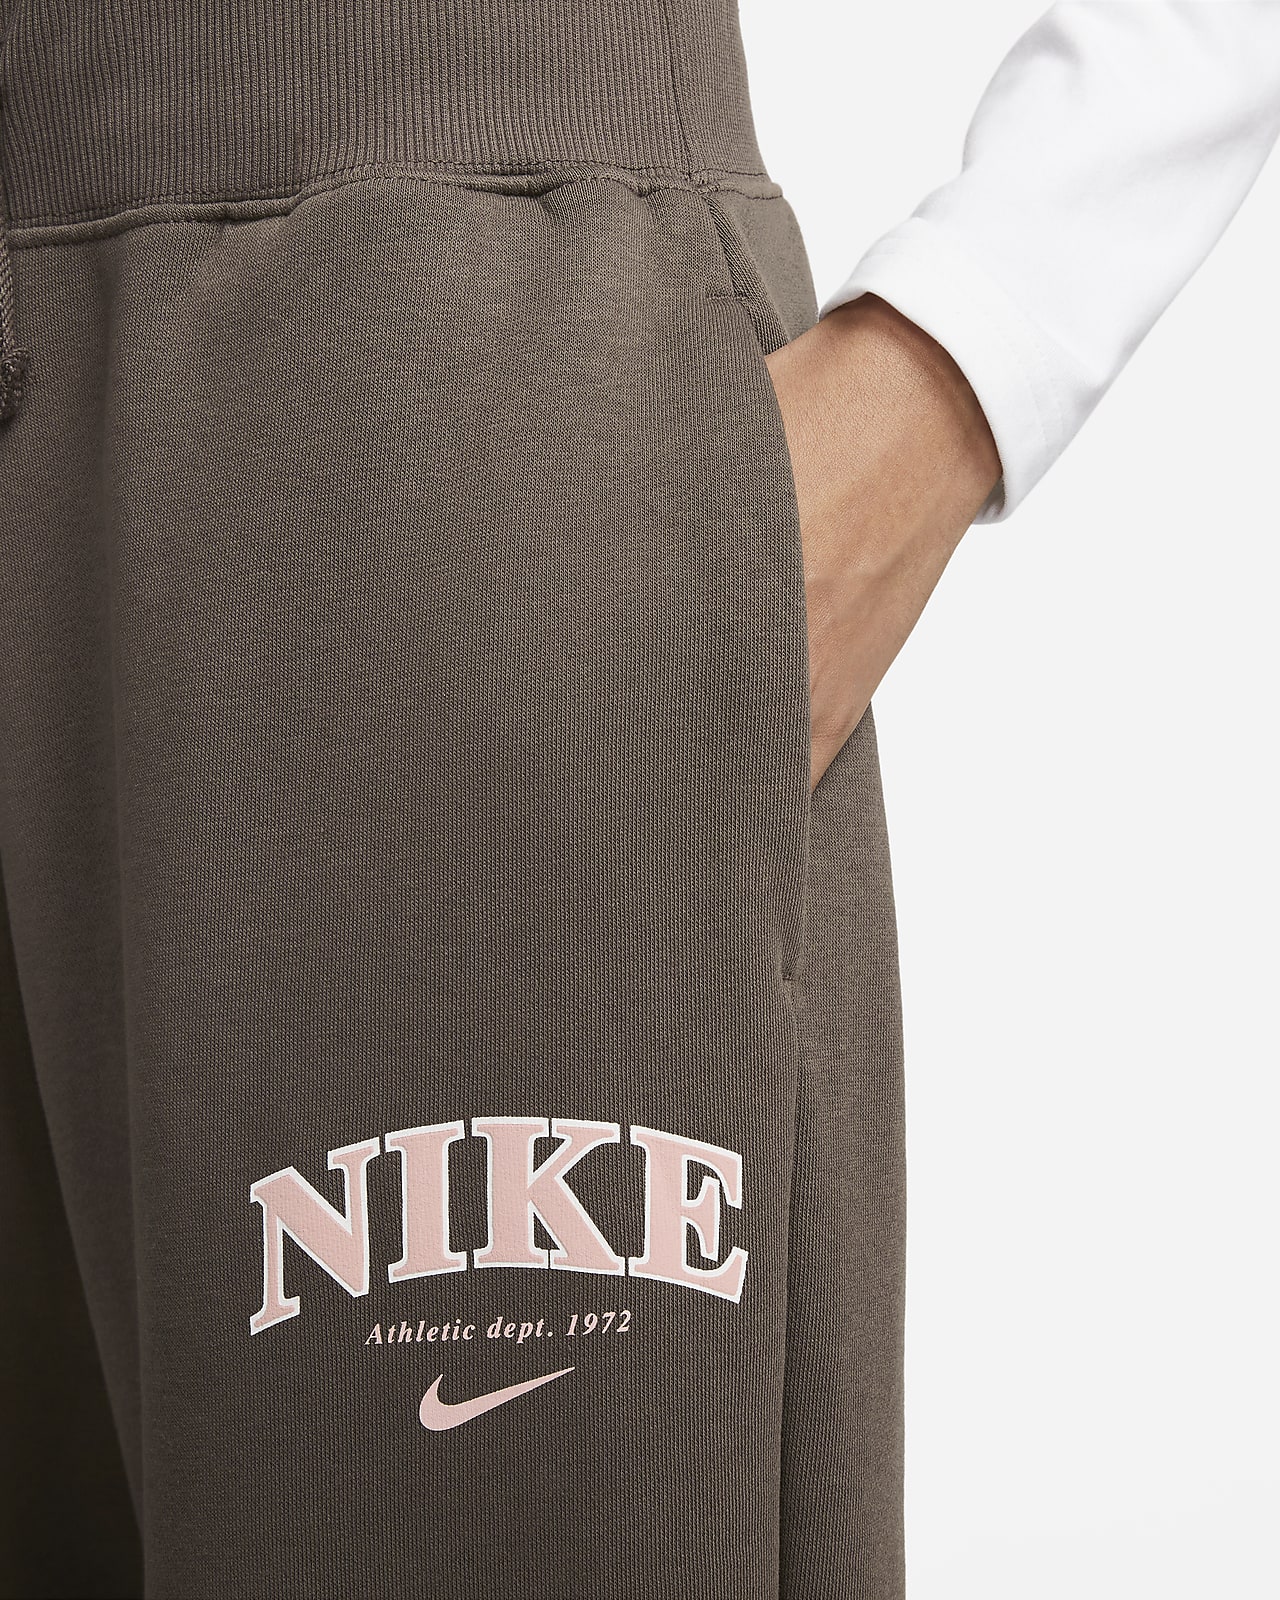 papel Materialismo Superar Nike Sportswear Phoenix Fleece Pantalón de chándal oversize de talle alto -  Mujer. Nike ES